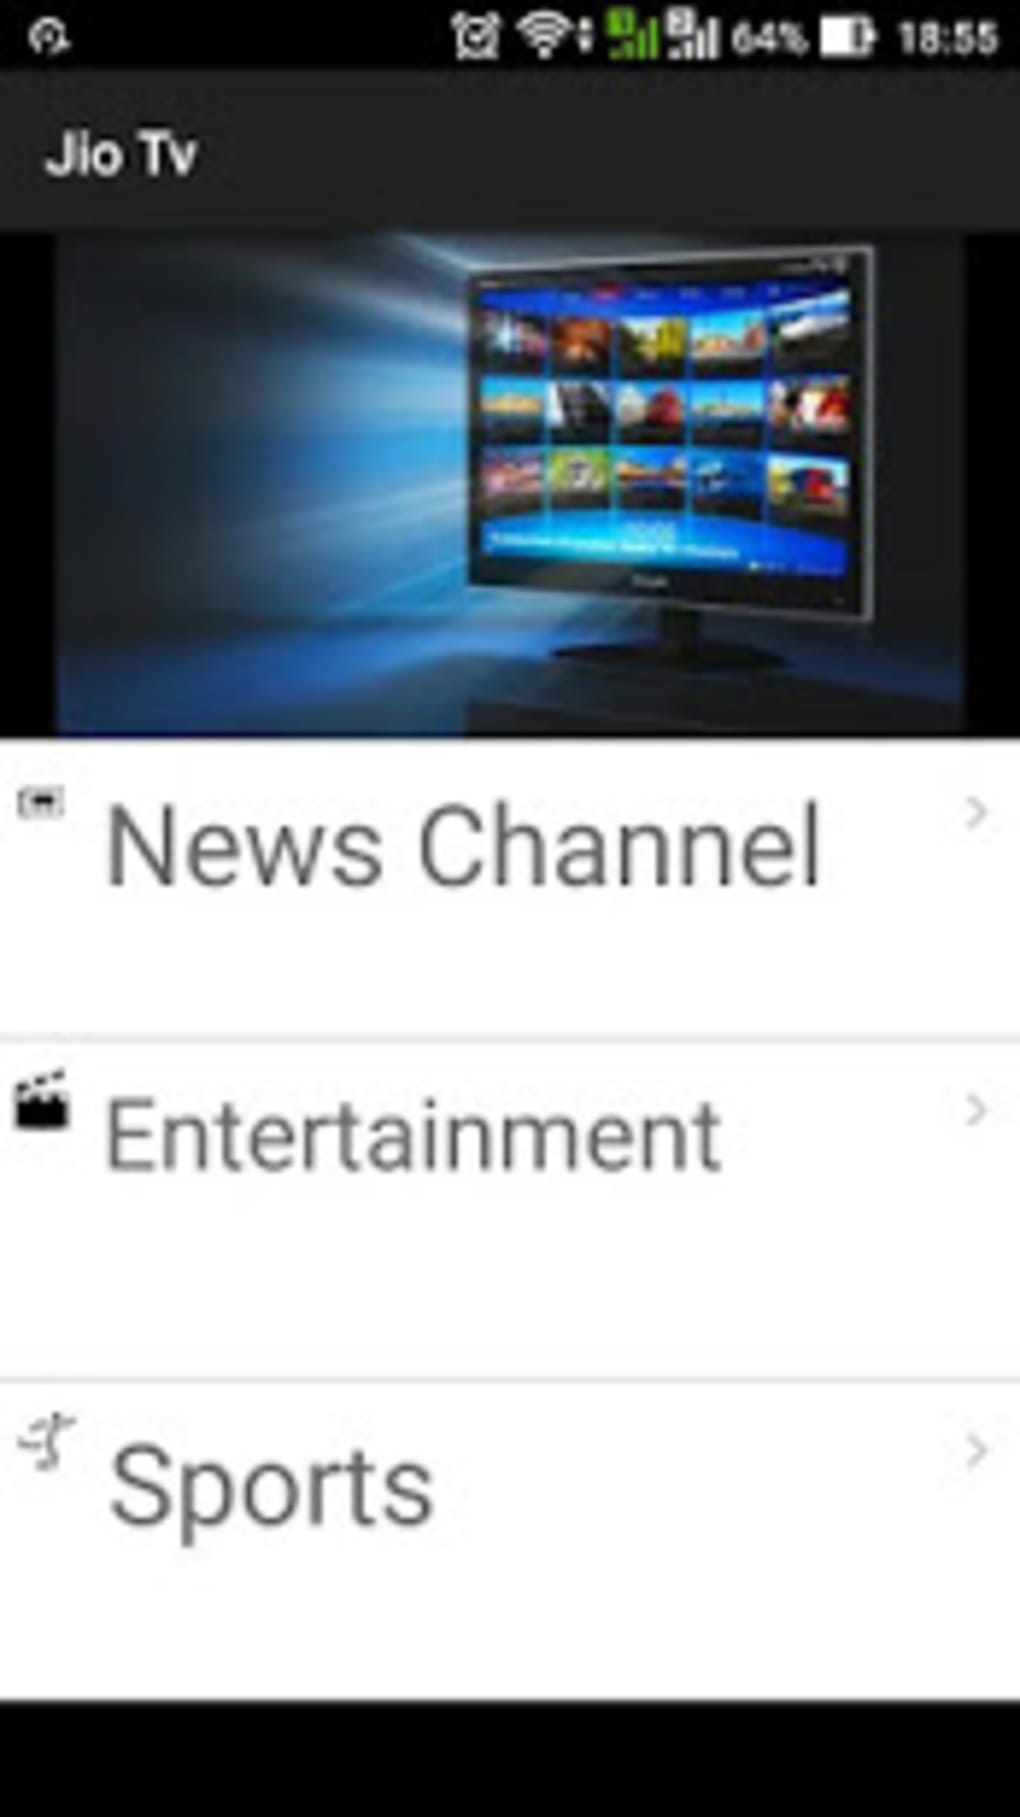 jio tv app for windows